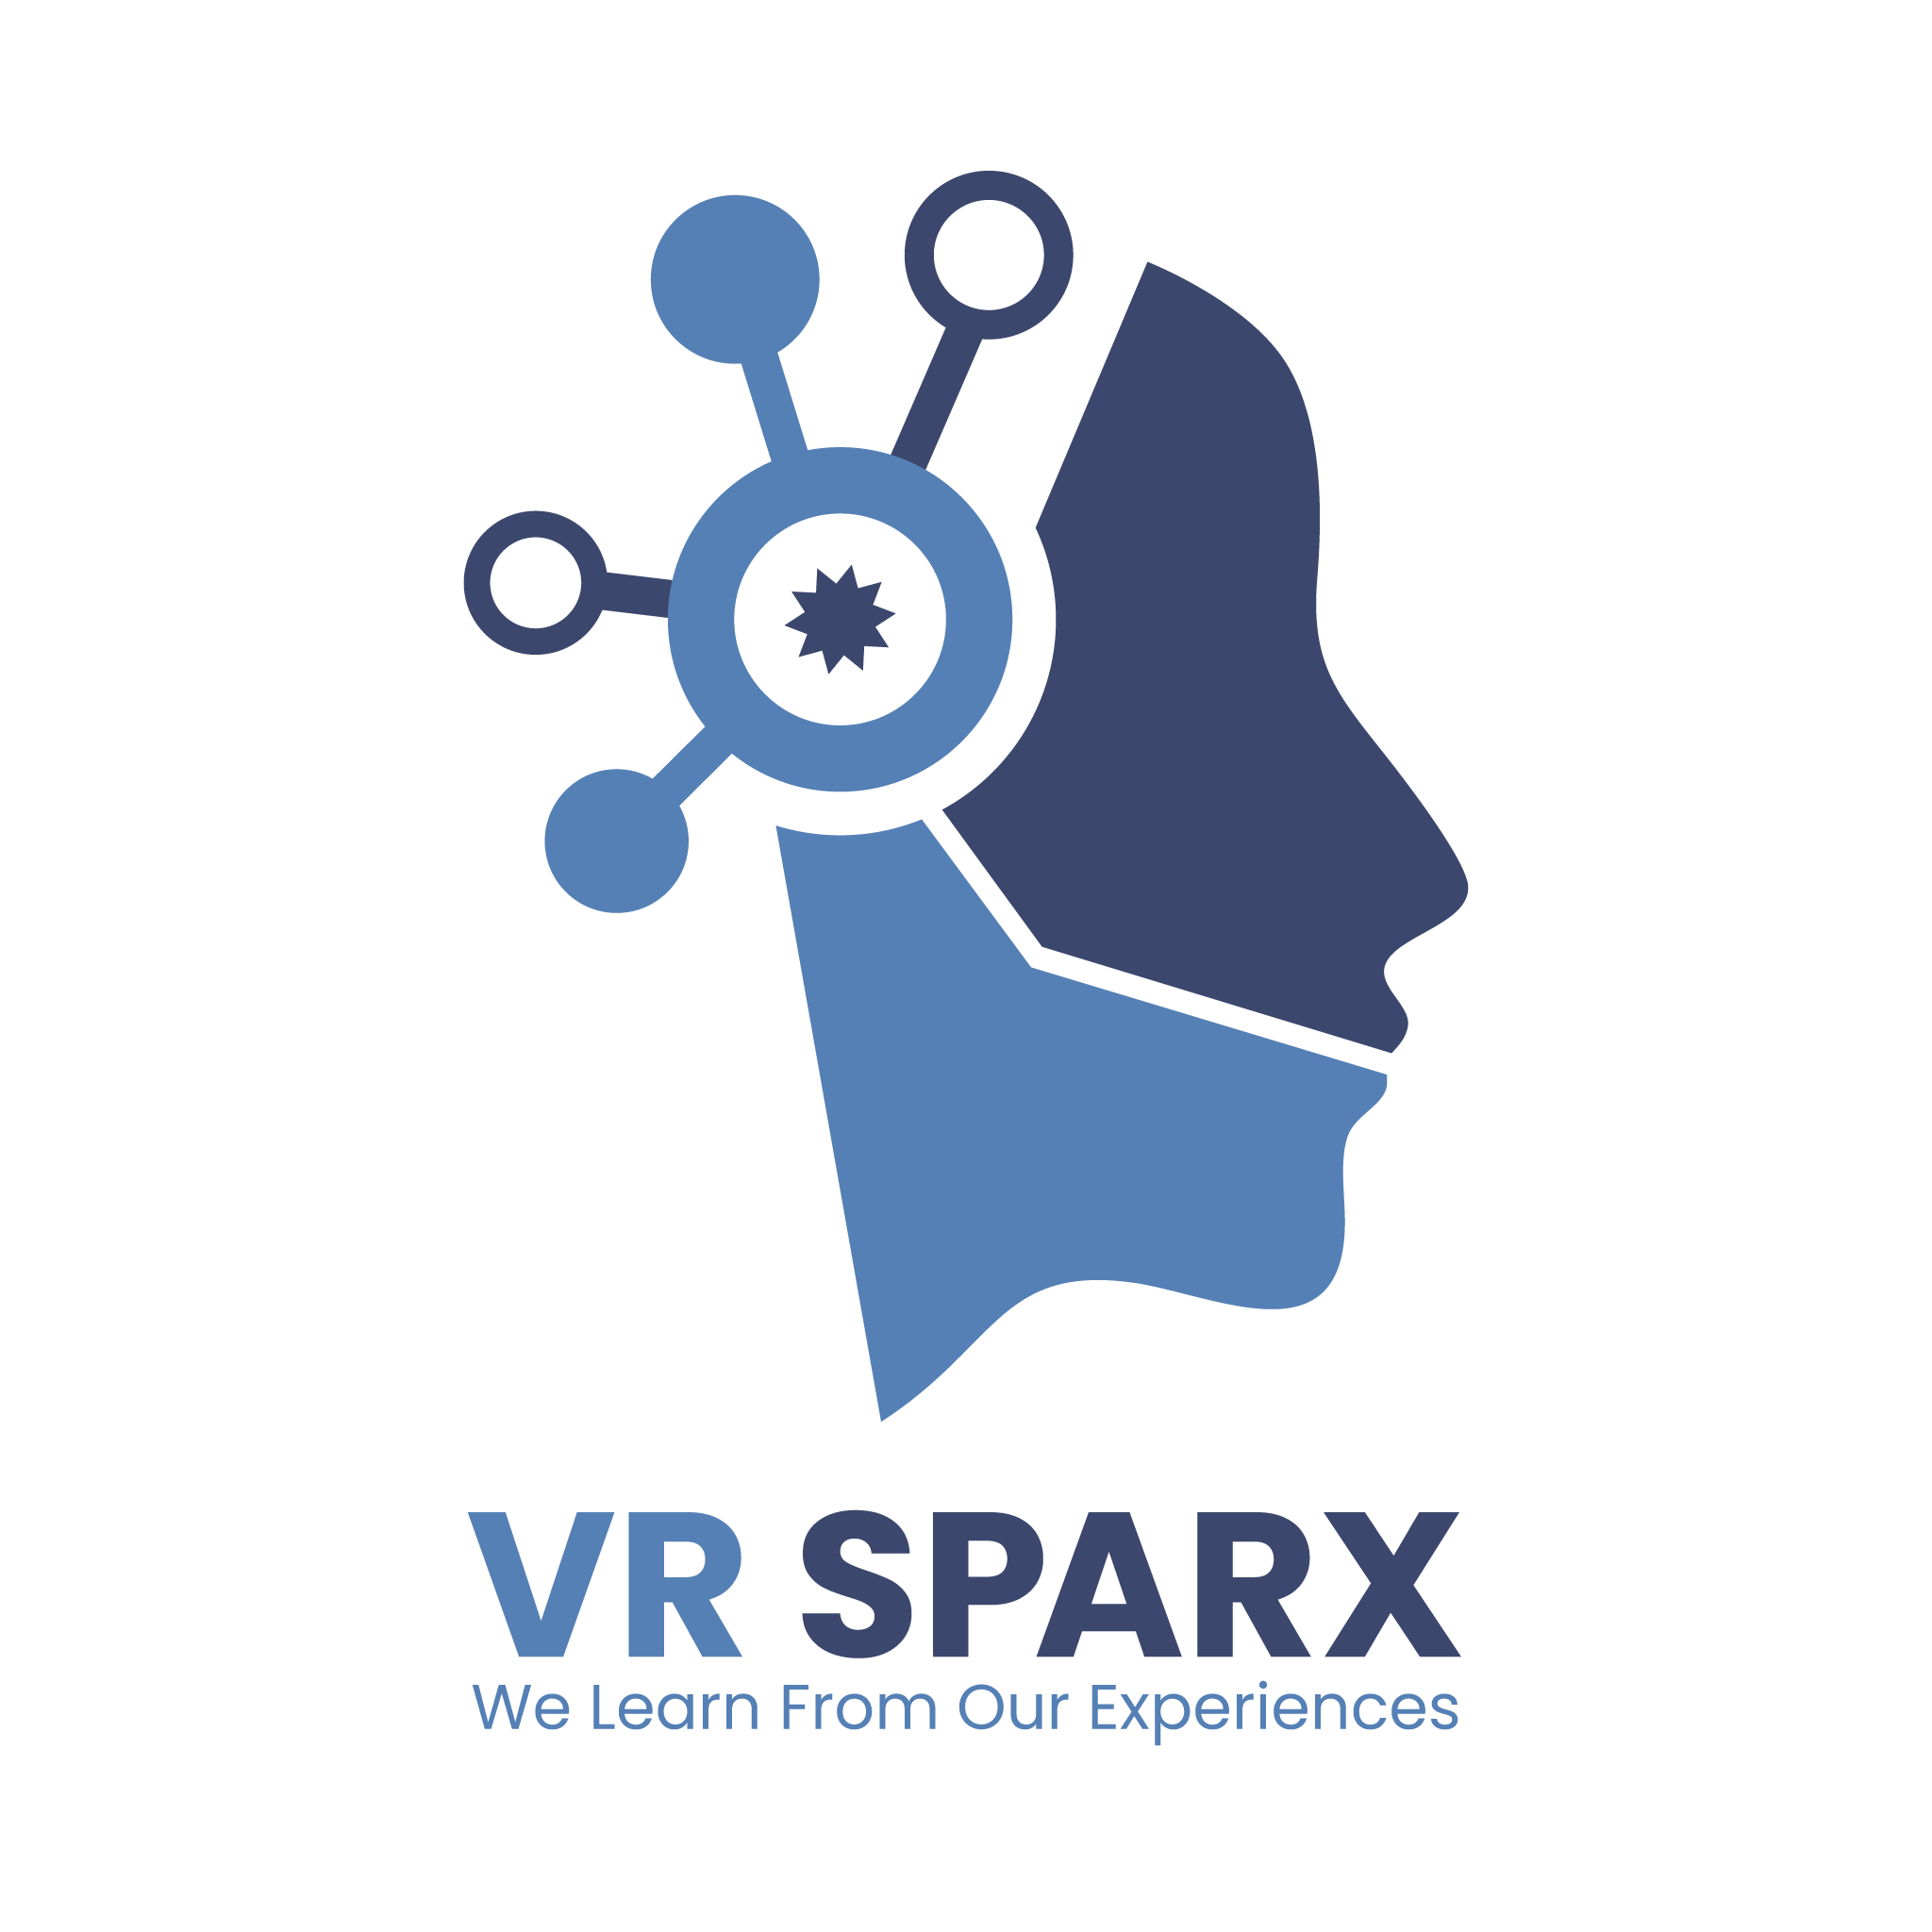 VR Sparx